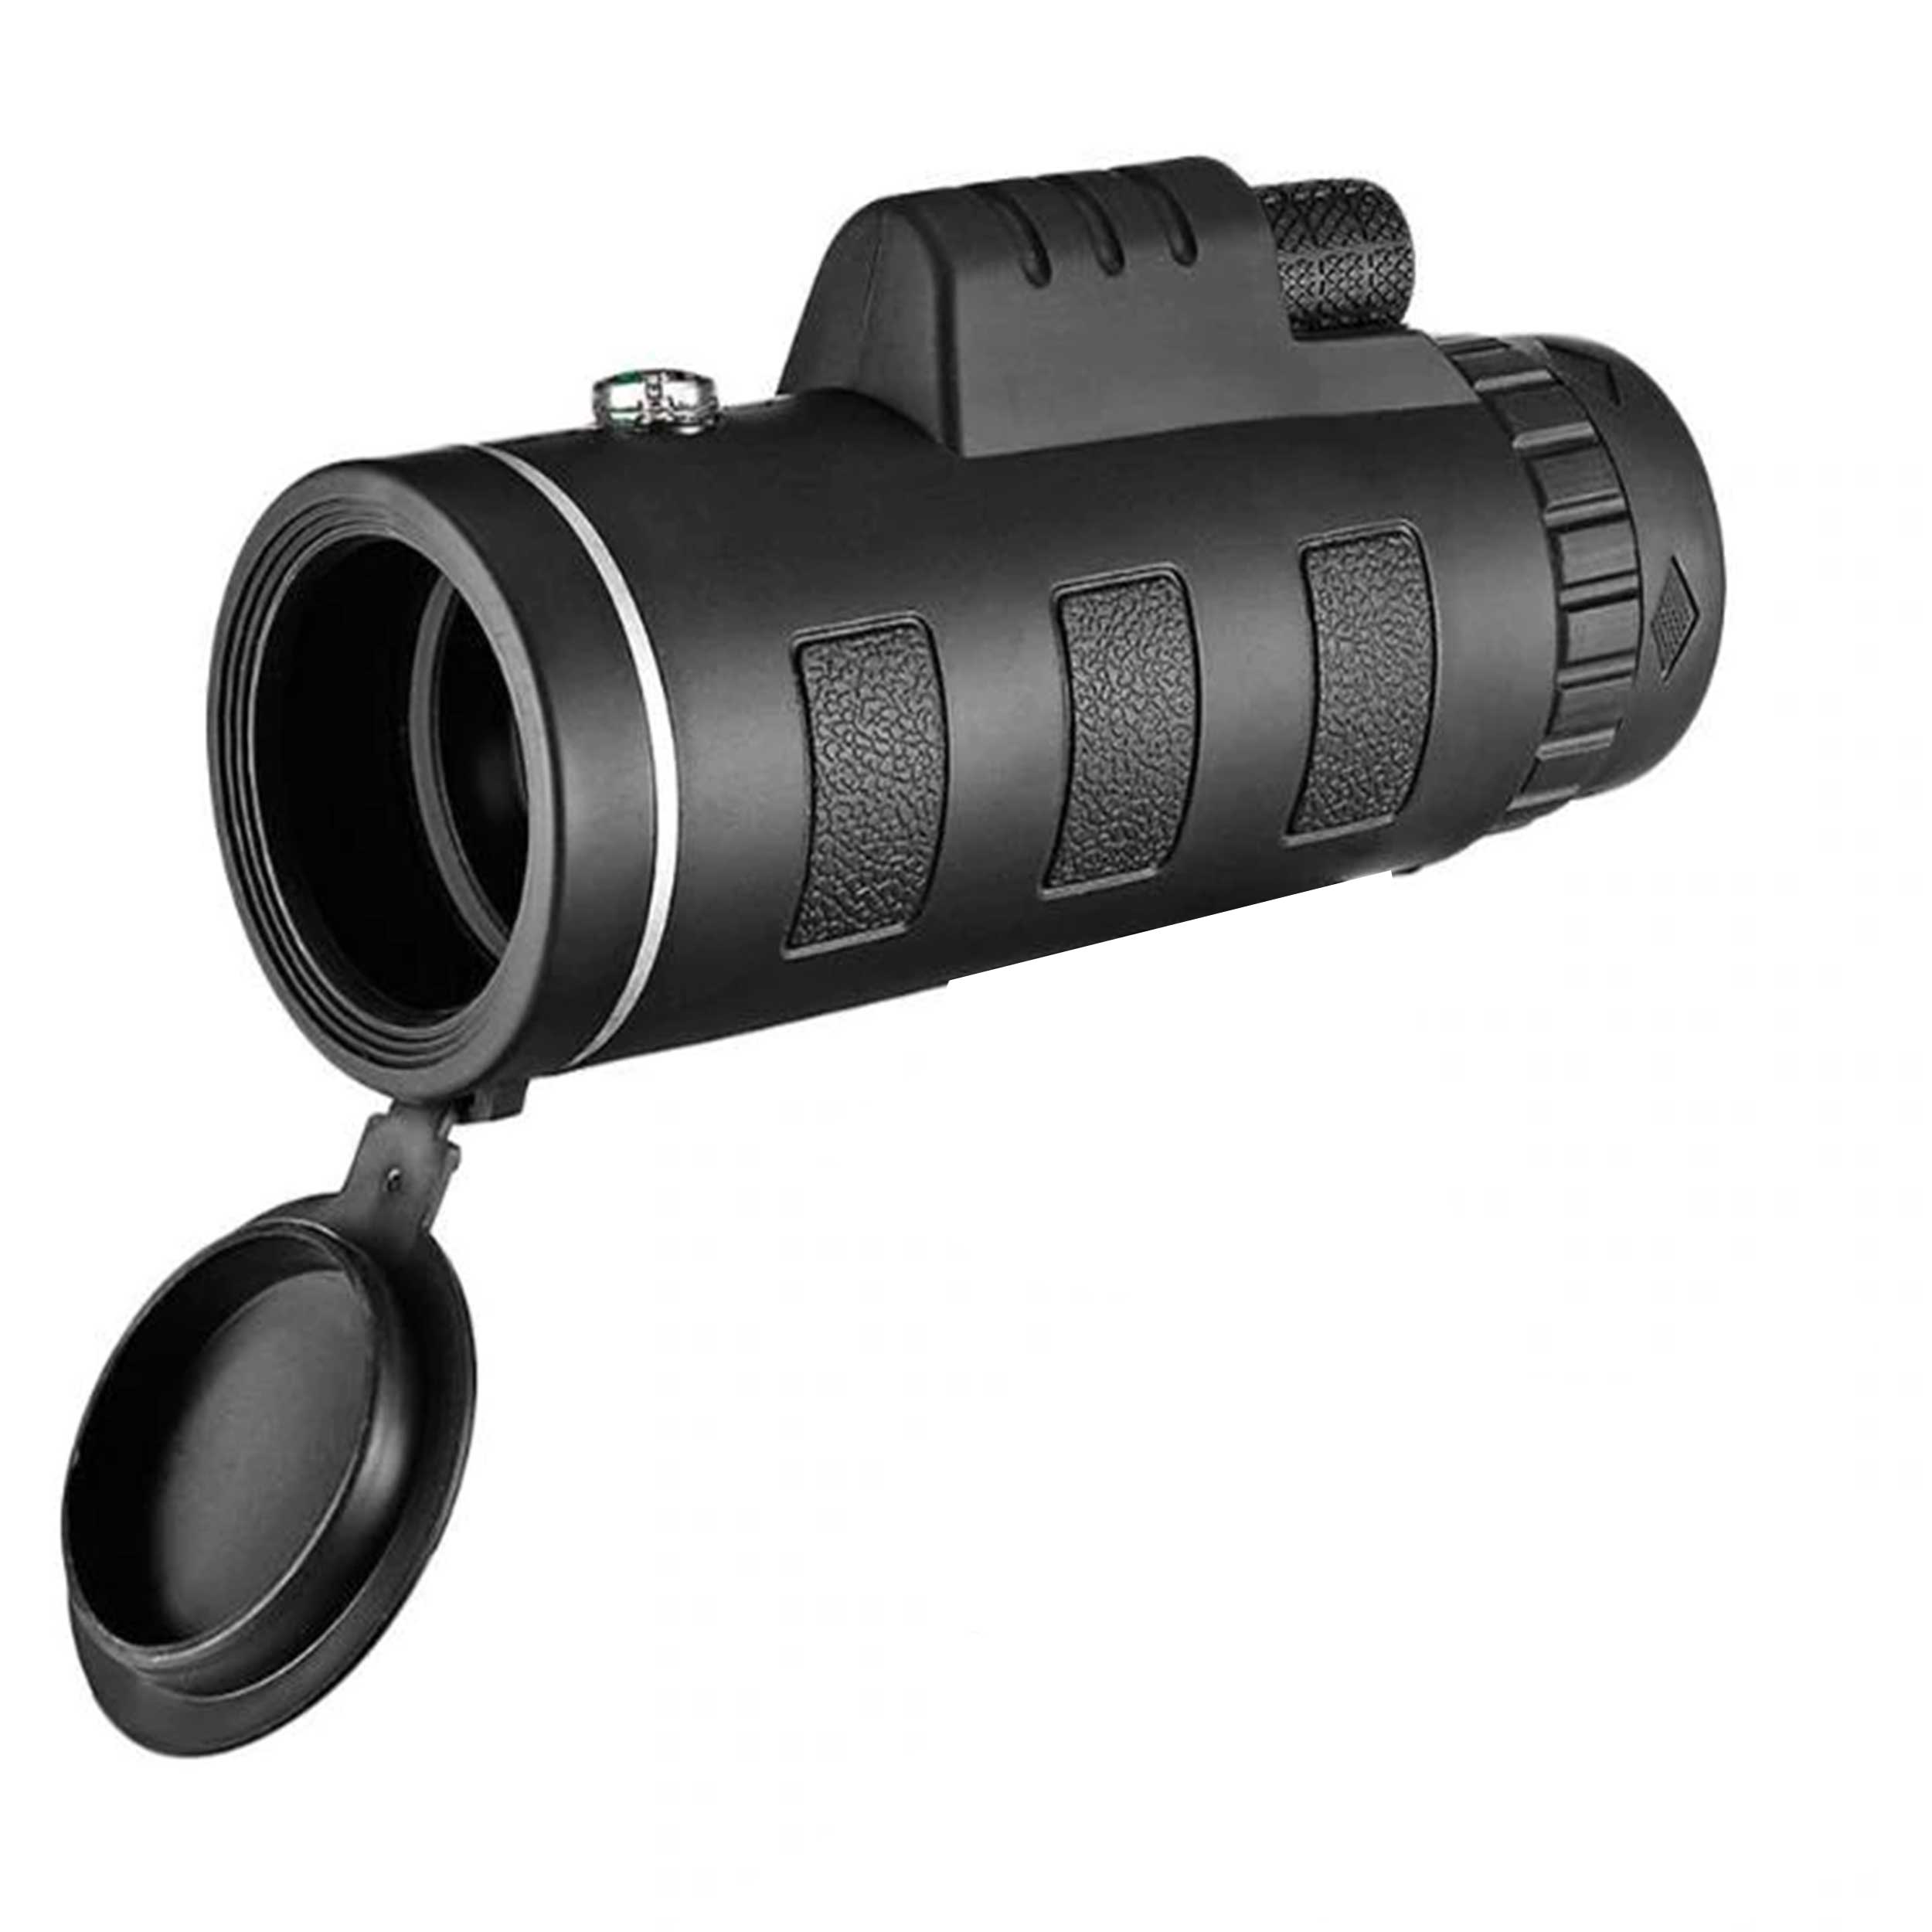 دوربین تک چشمی مدل Monocular4060